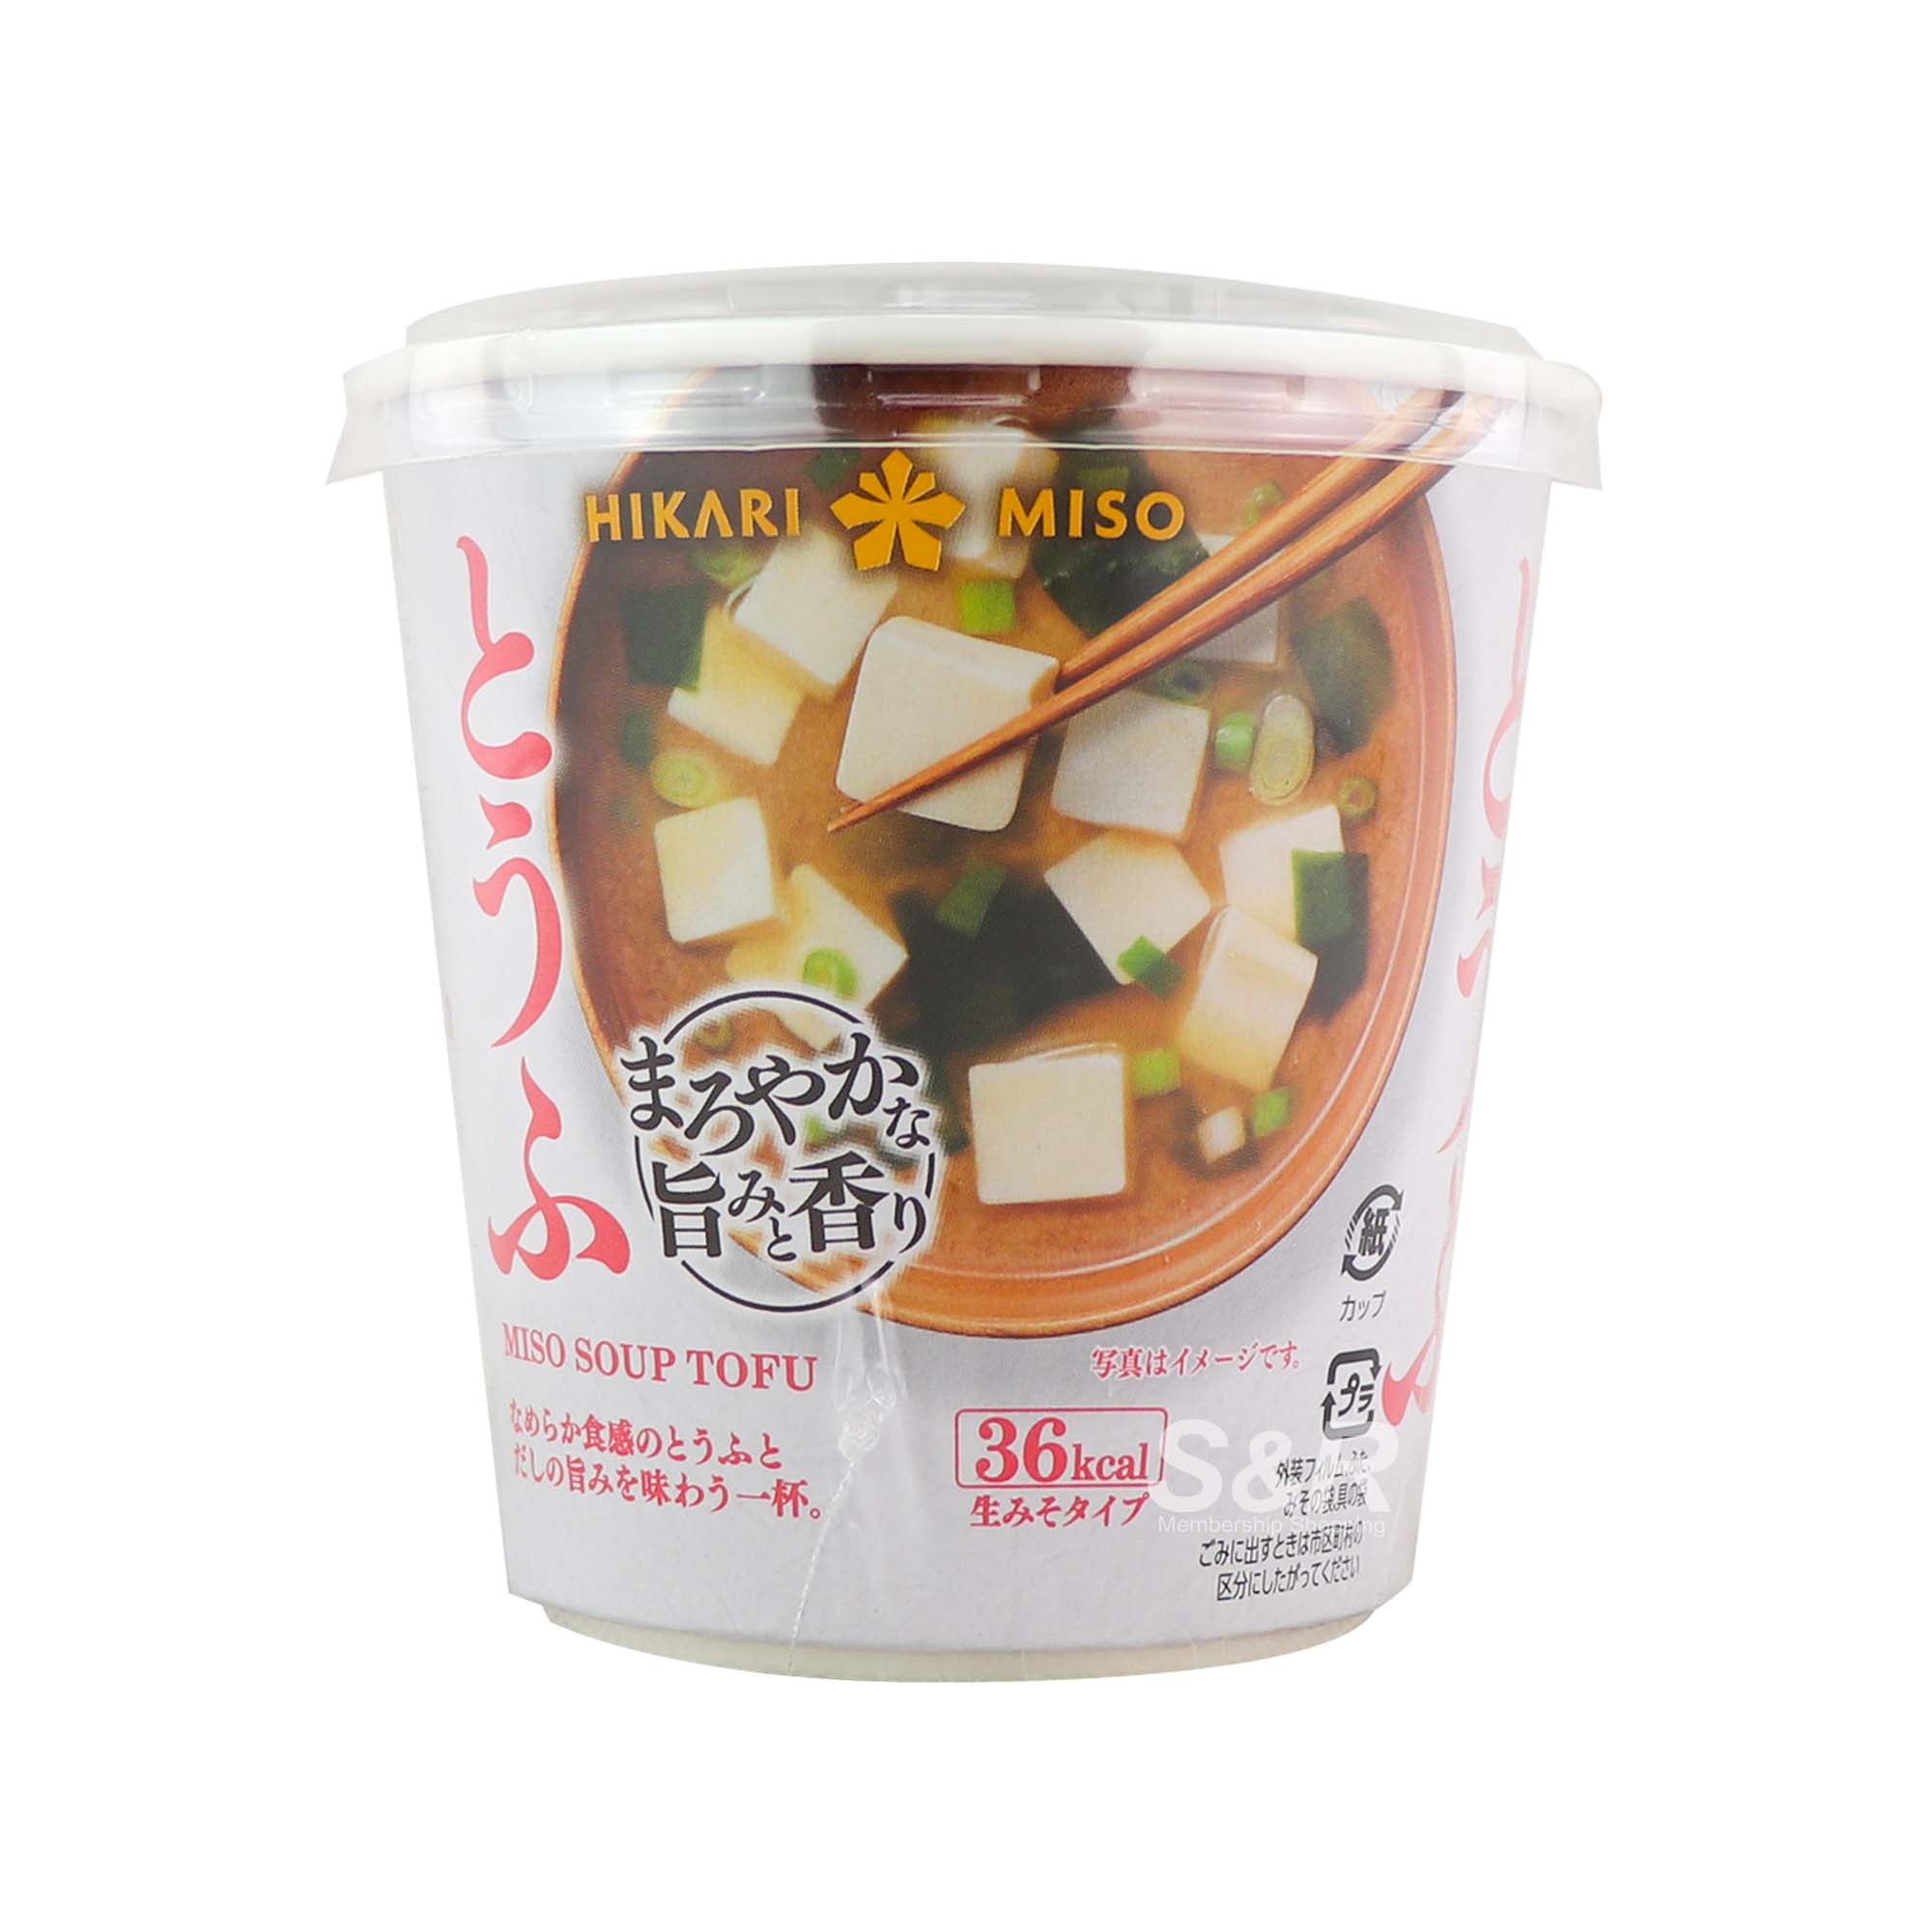 Hikari Miso Soup Tofu 1 cup